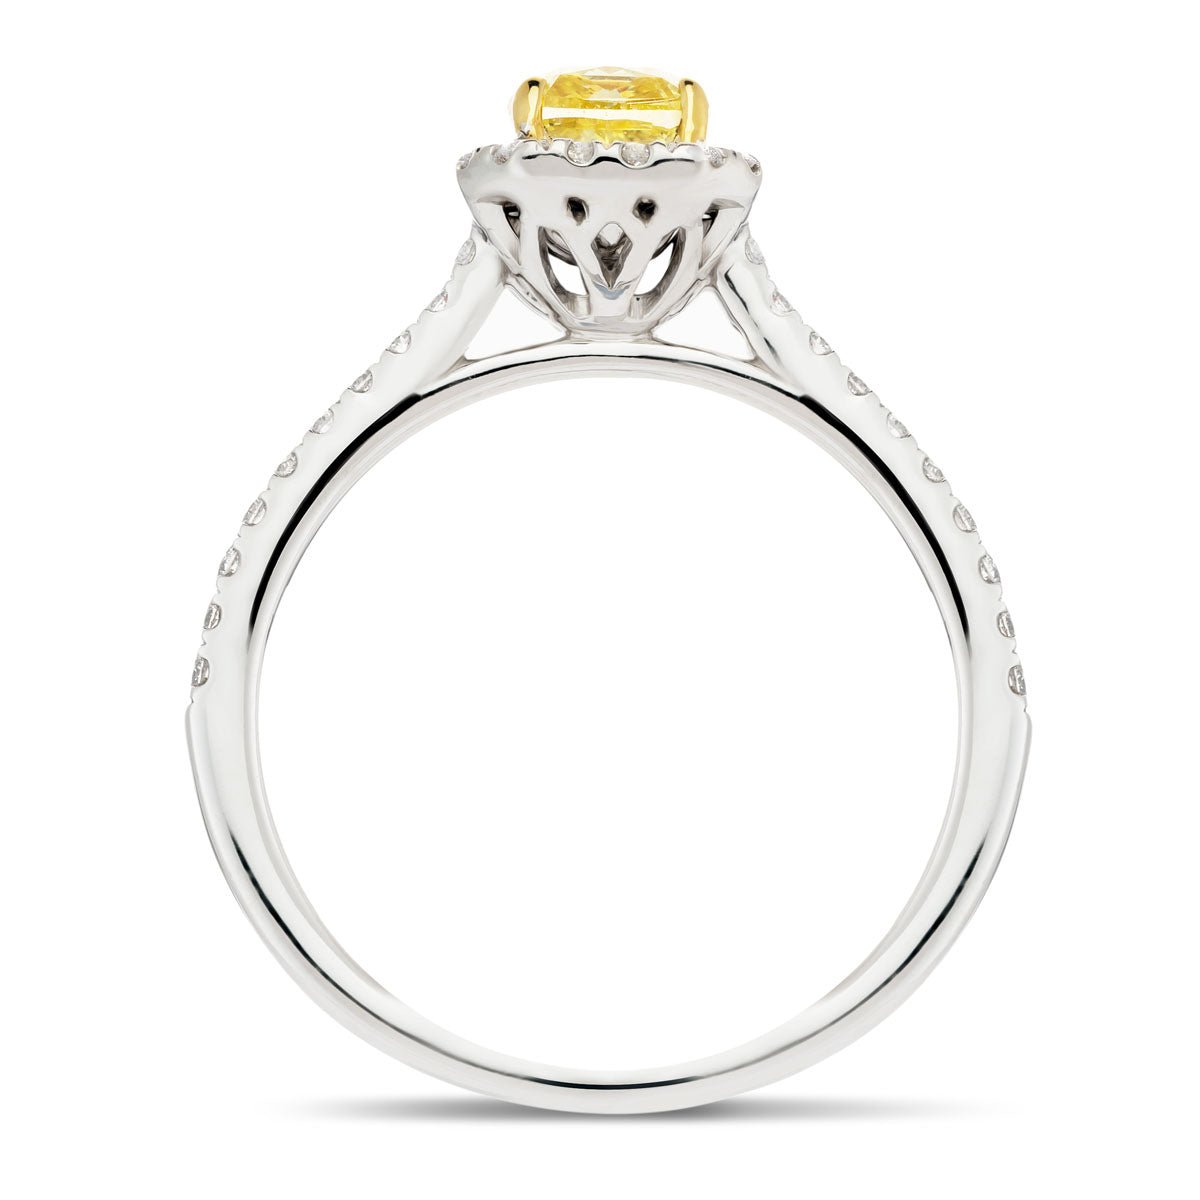 Certified Cushion Yellow Diamond Engagement Ring 0.80ct Ring in Platinum - All Diamond